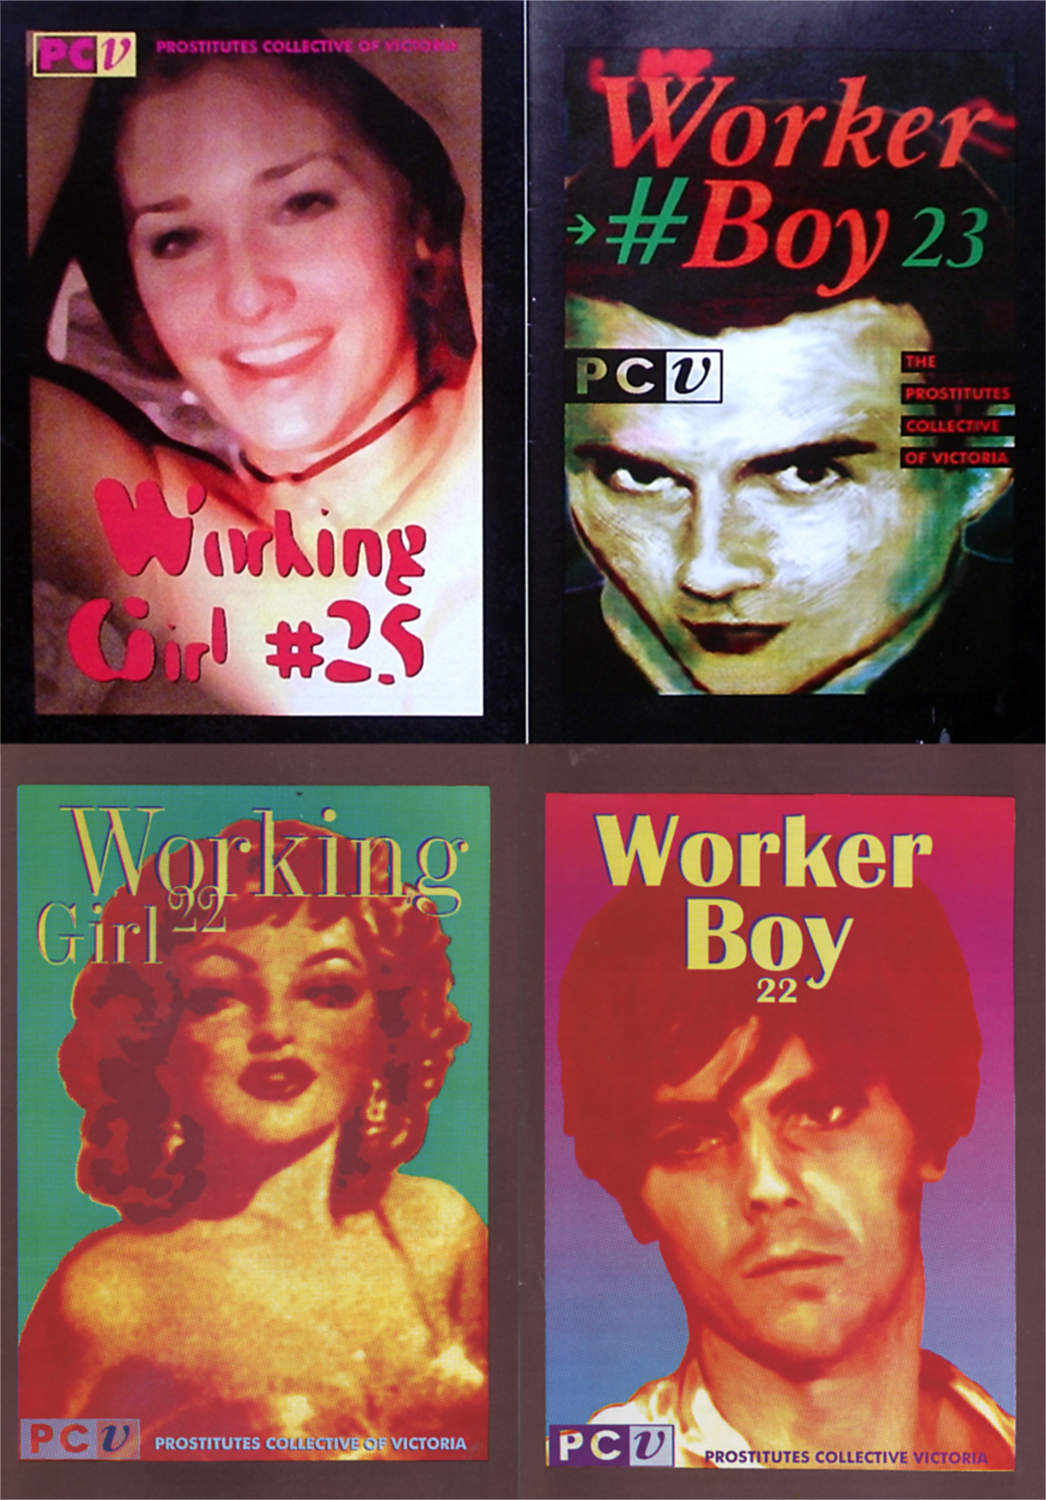 Working Girl, Worker Boy magazine covers